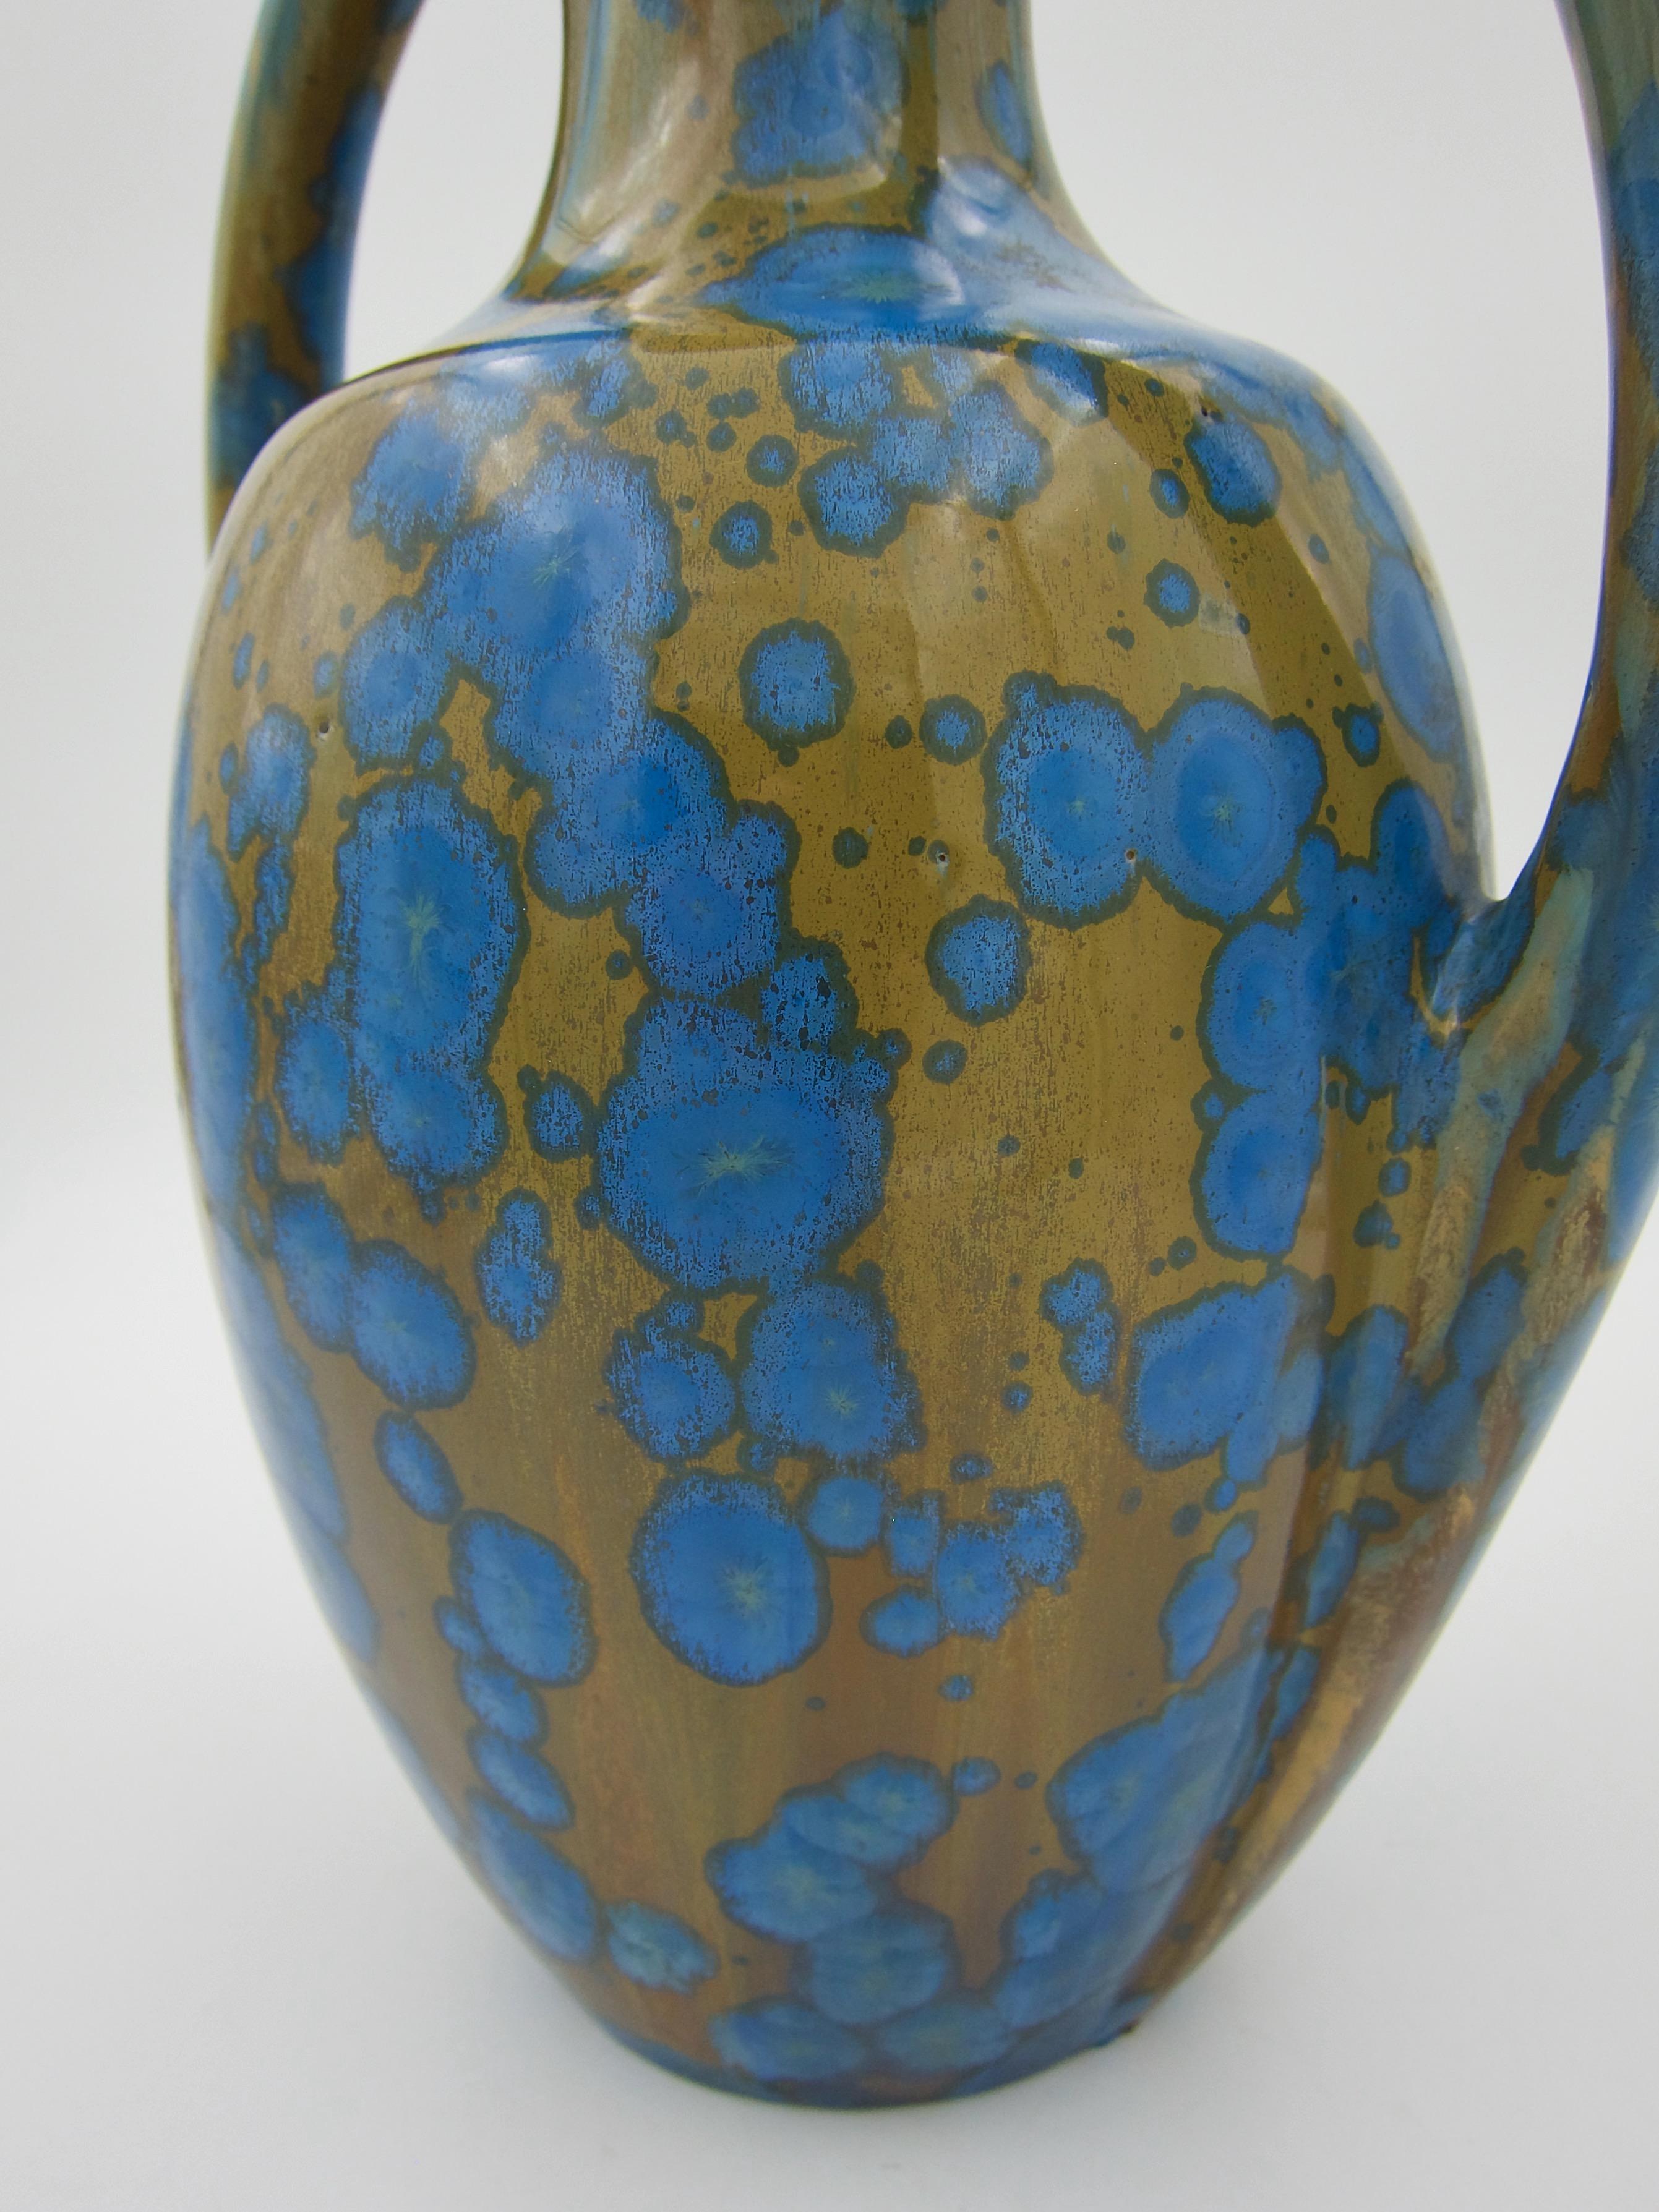 Ceramic French Pierrefonds Art Pottery Vase with Blue Crystalline Glaze